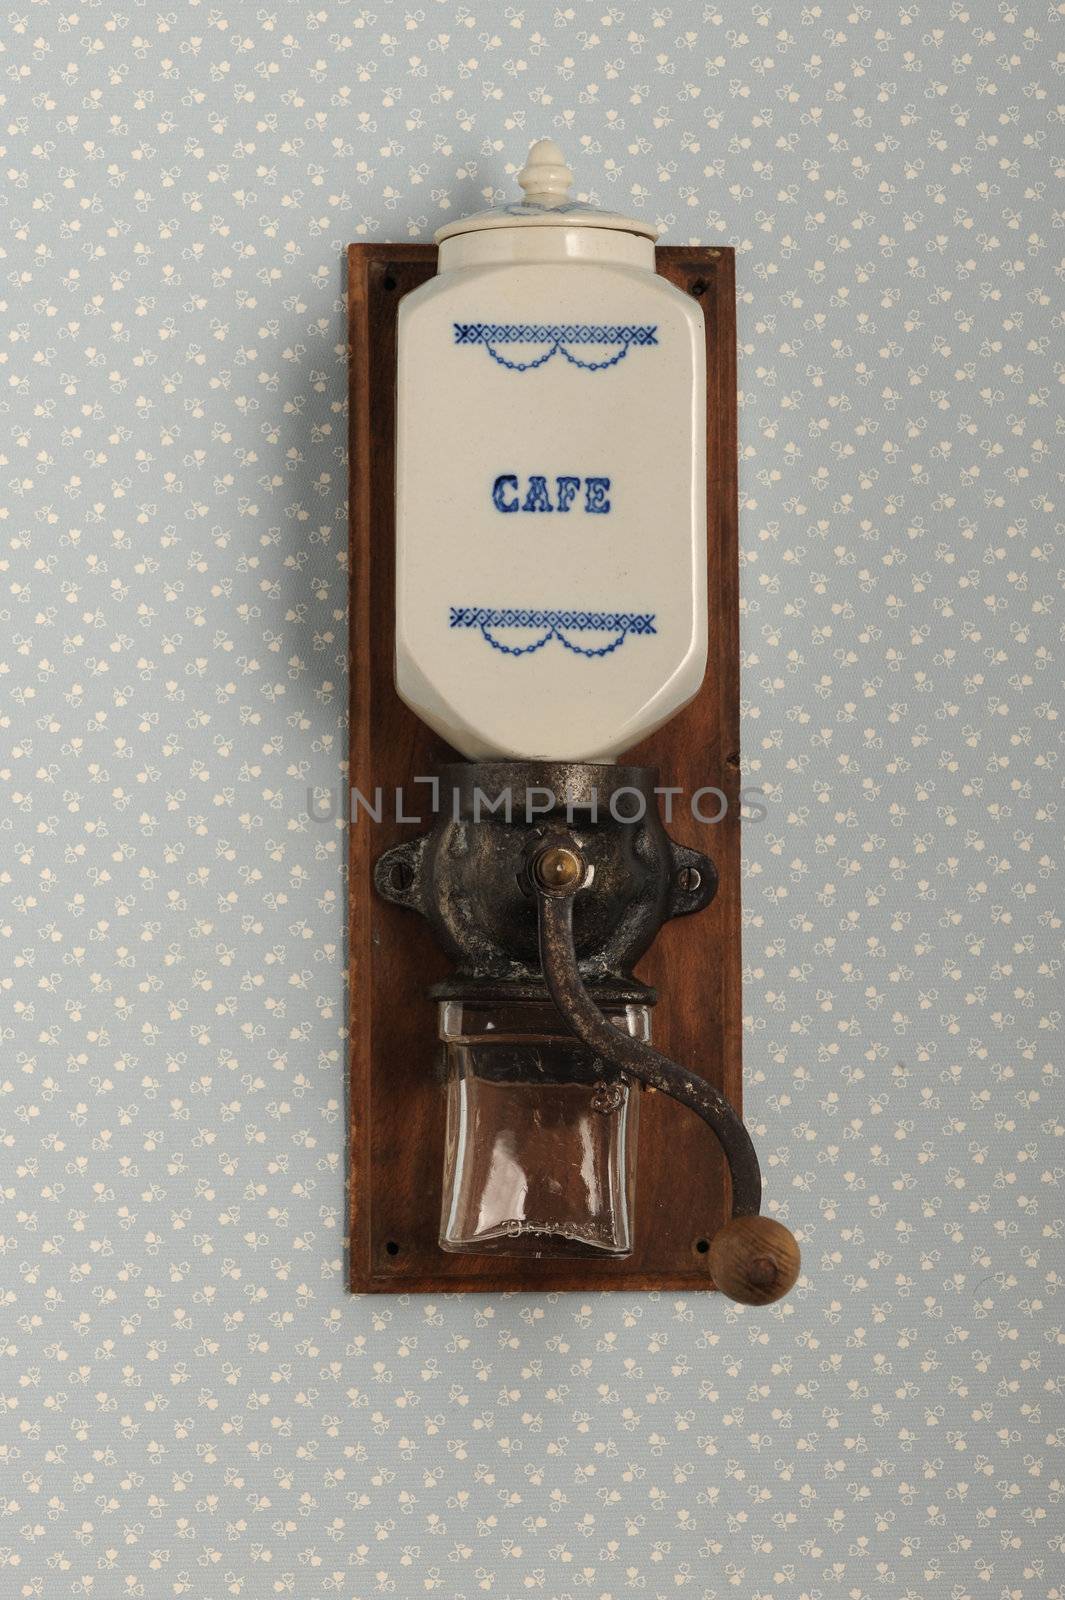 Coffee grinder on vintage background by stokkete